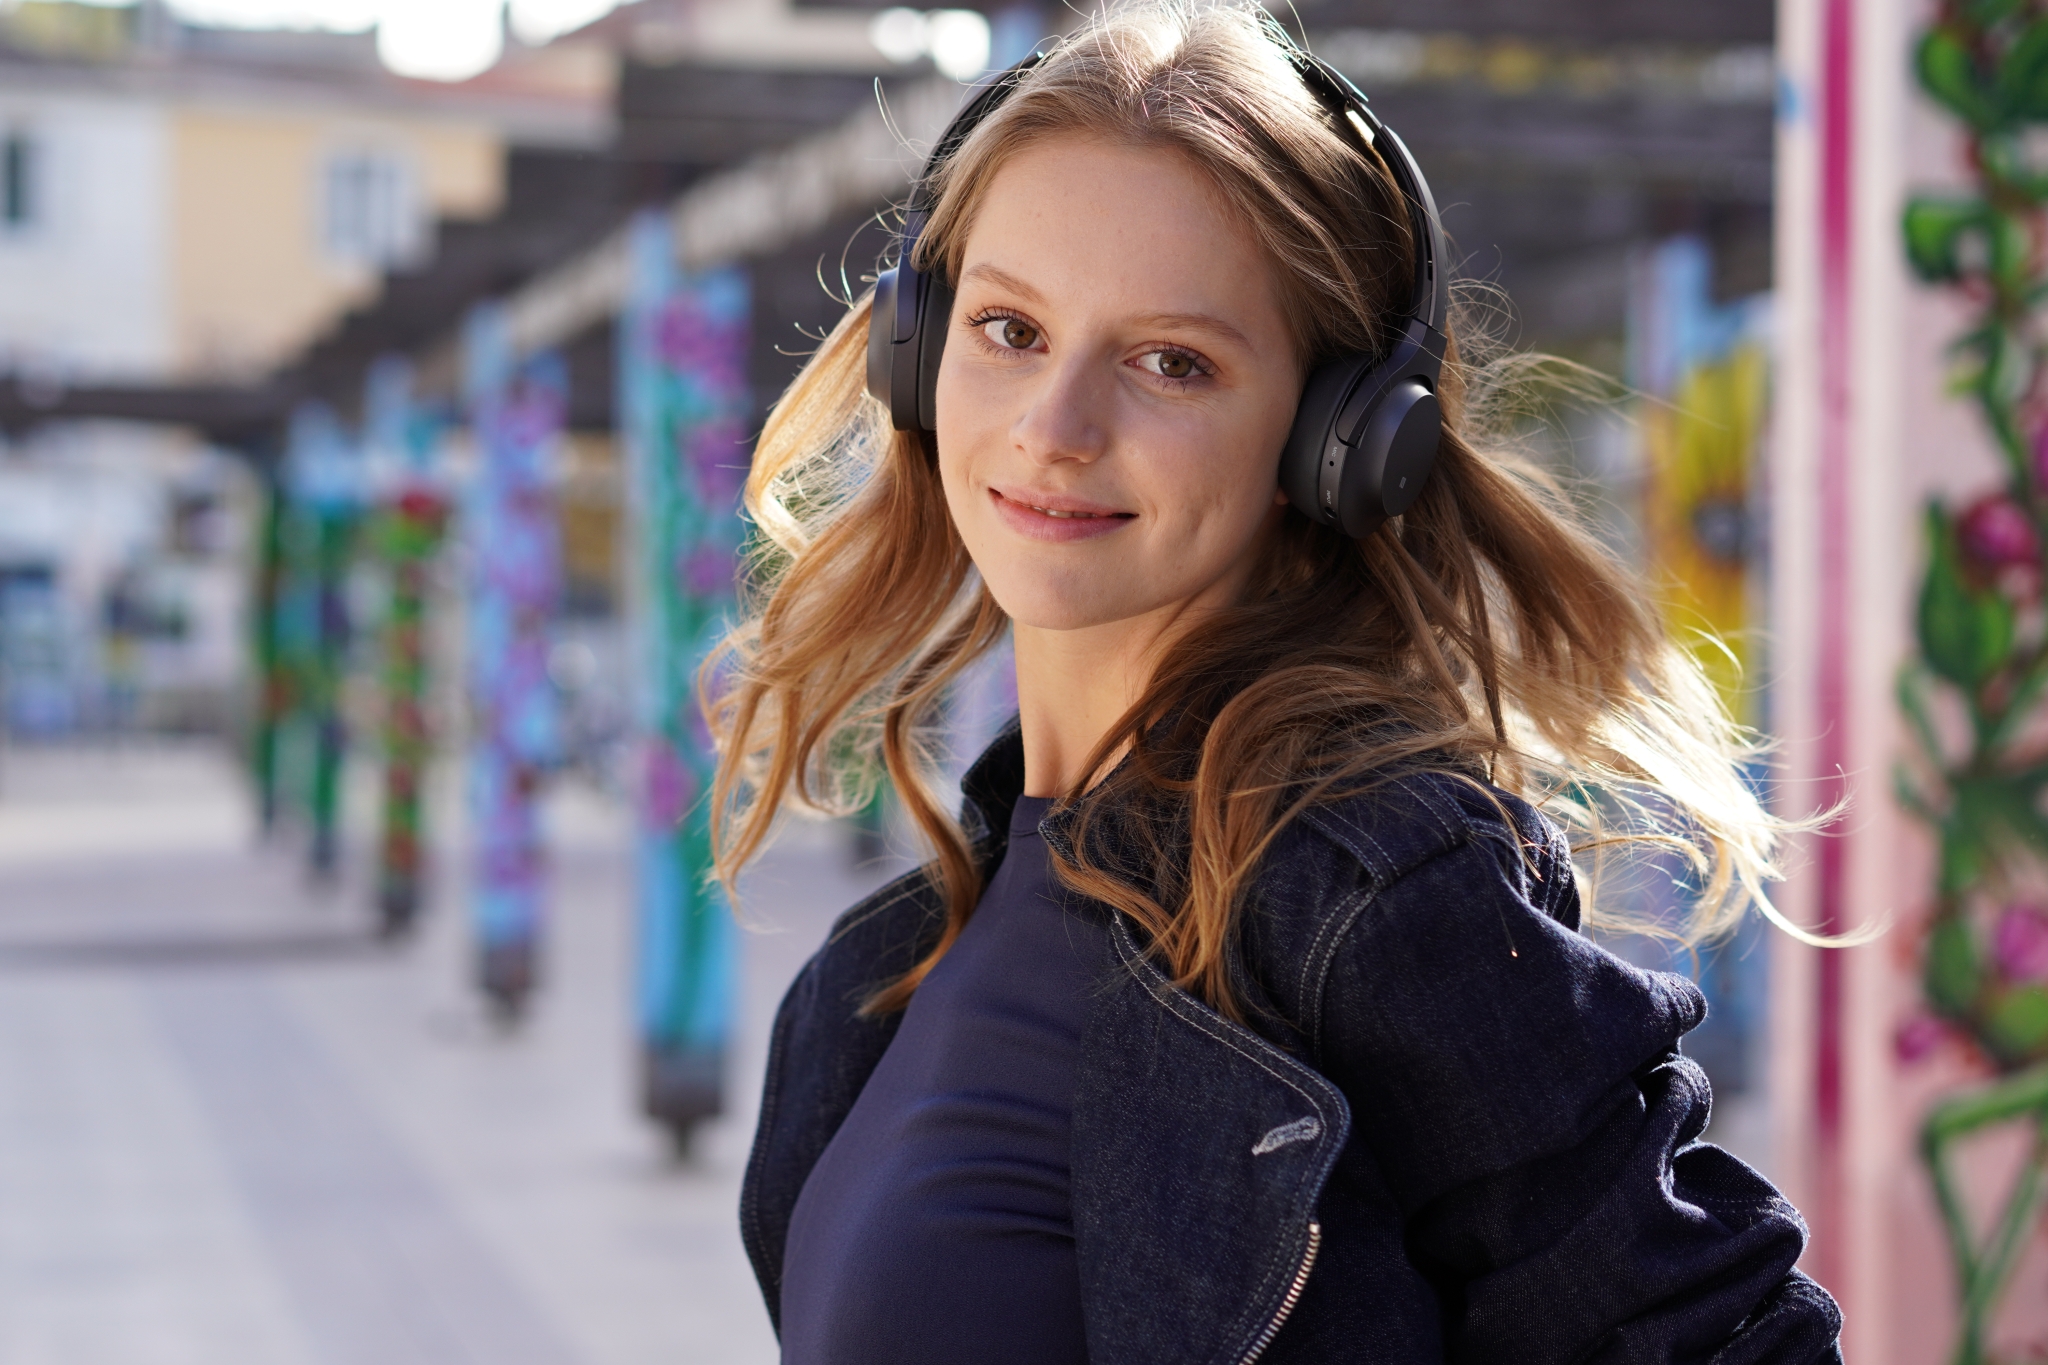 Portrait of female model standing outside wearing headphones